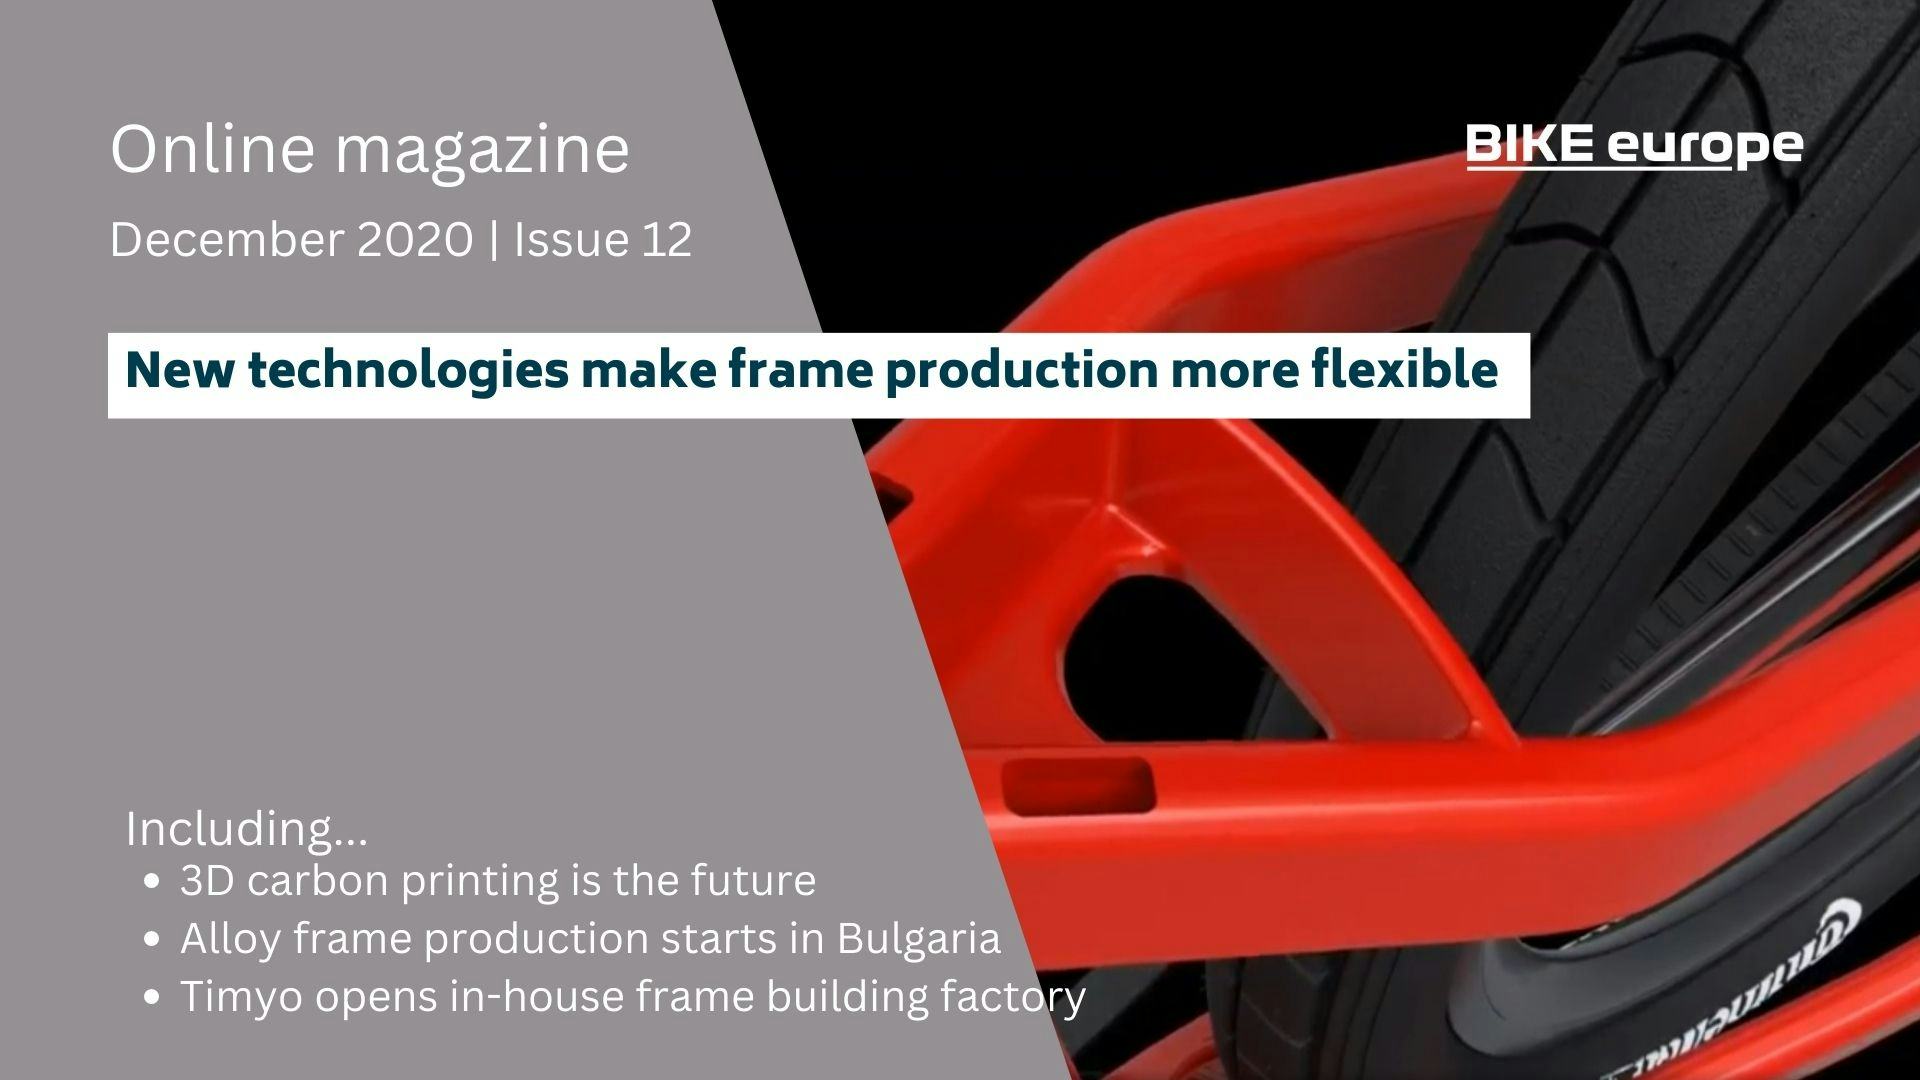 Online magazine: New technologies make frame production more flexible